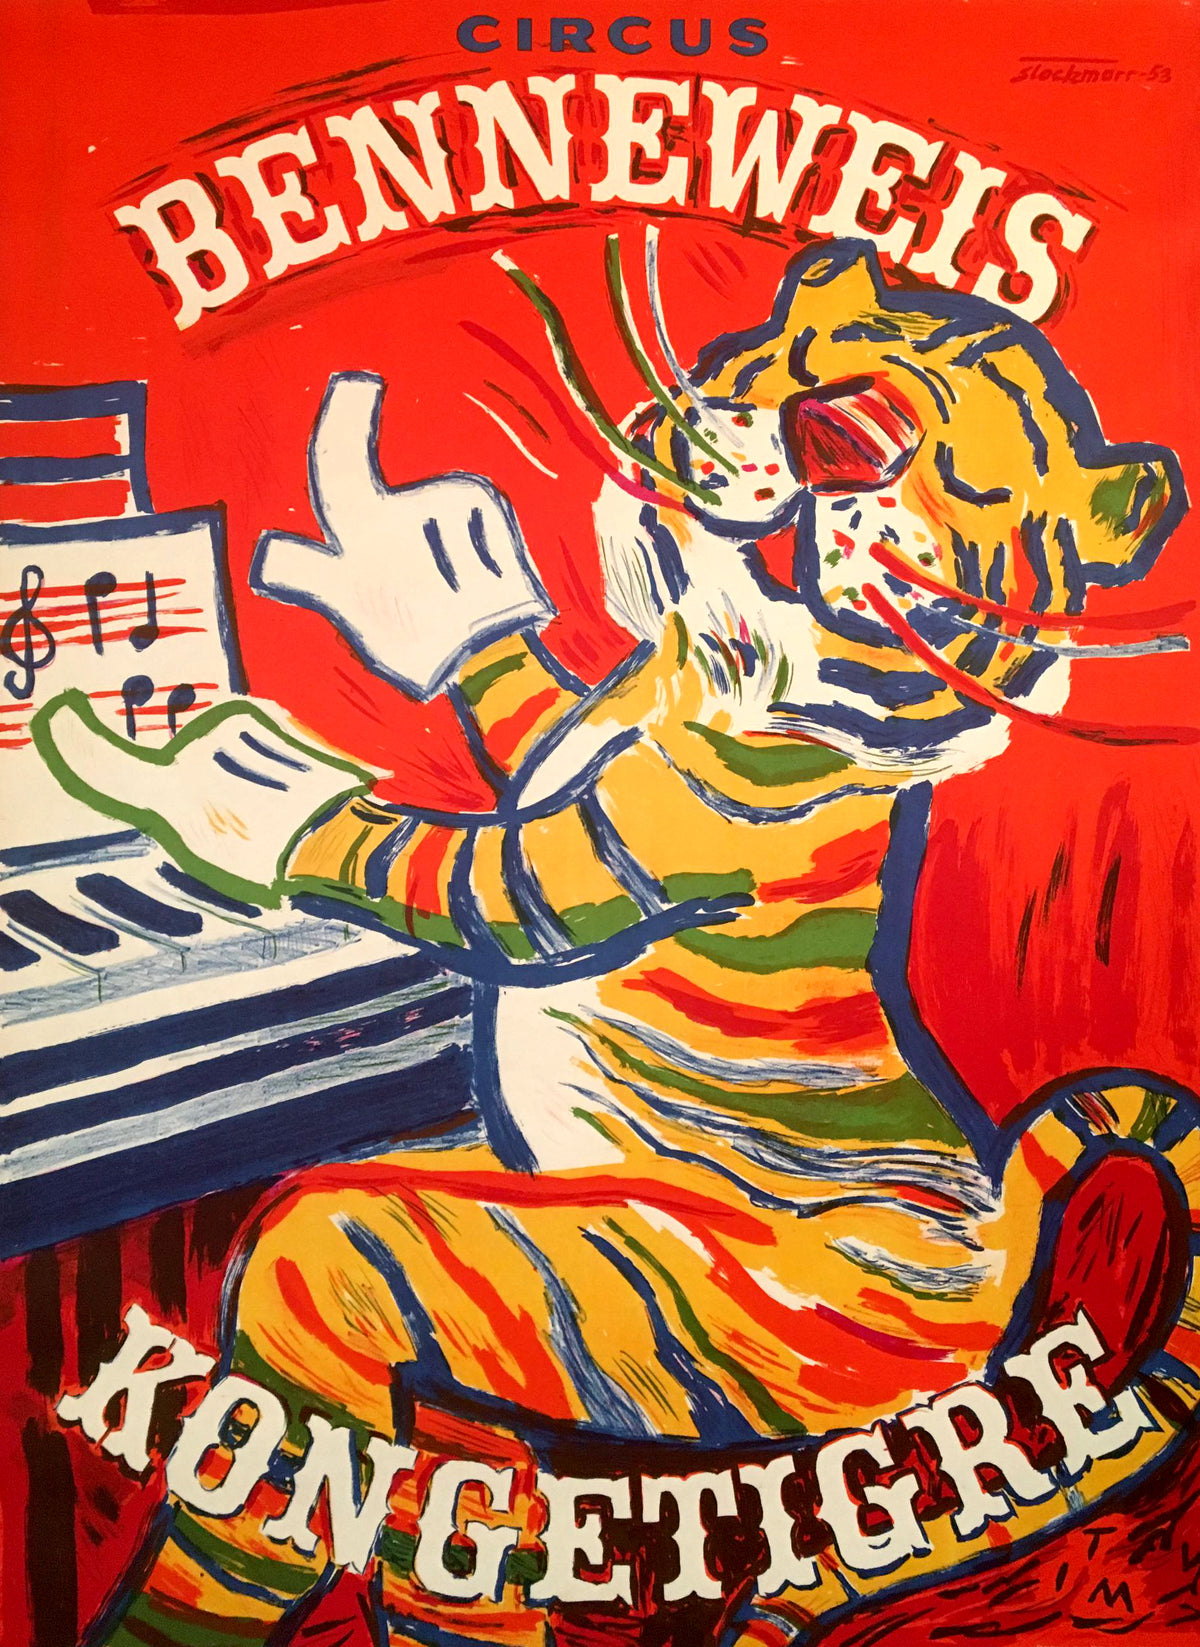 Circus Benneweis- Kongetigre - Authentic Vintage Poster